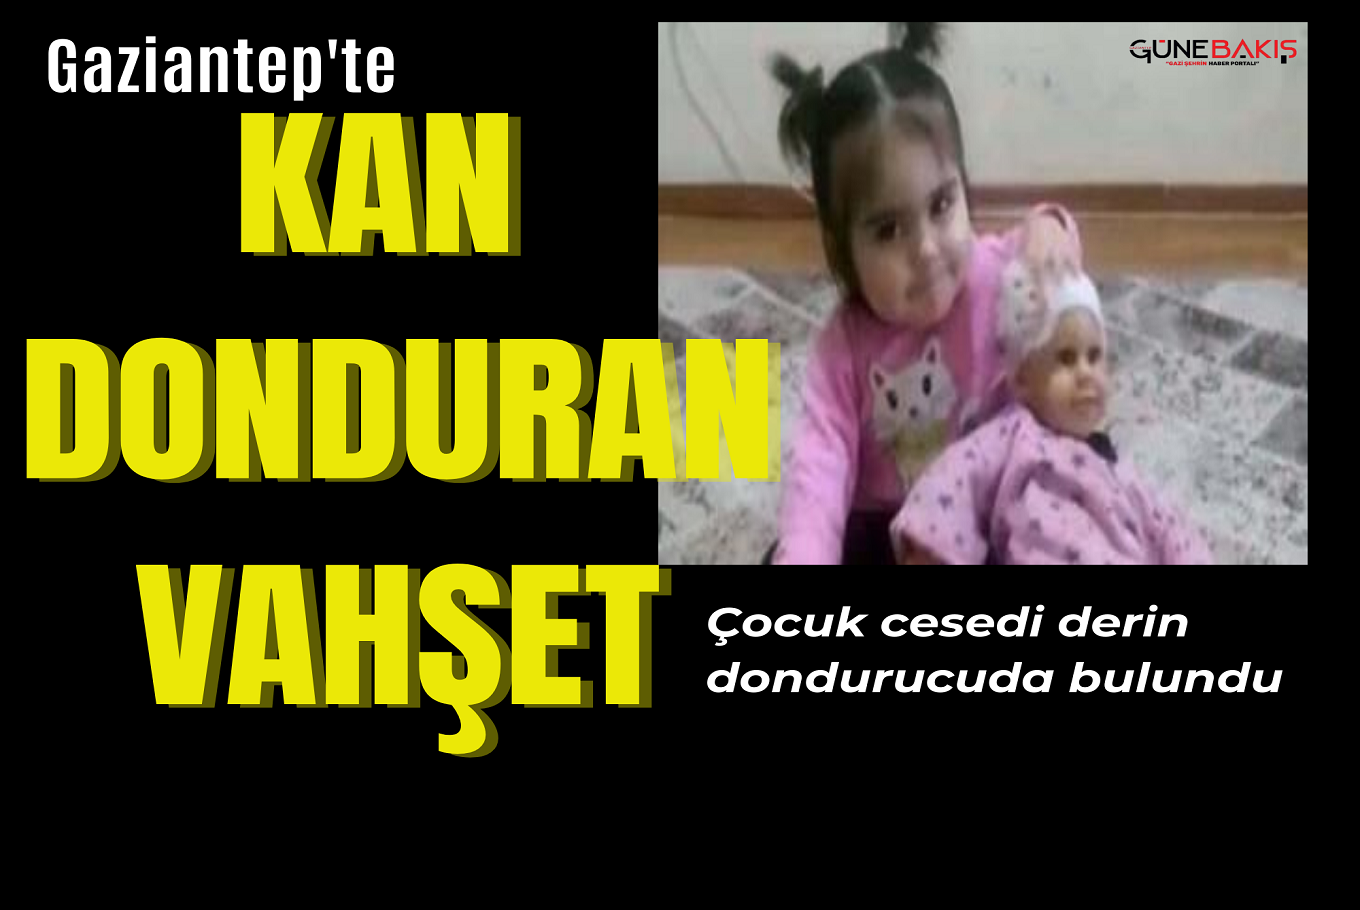 Gaziantep'te vahşet: Çocuk cesedi derin dondurucuda bulundu